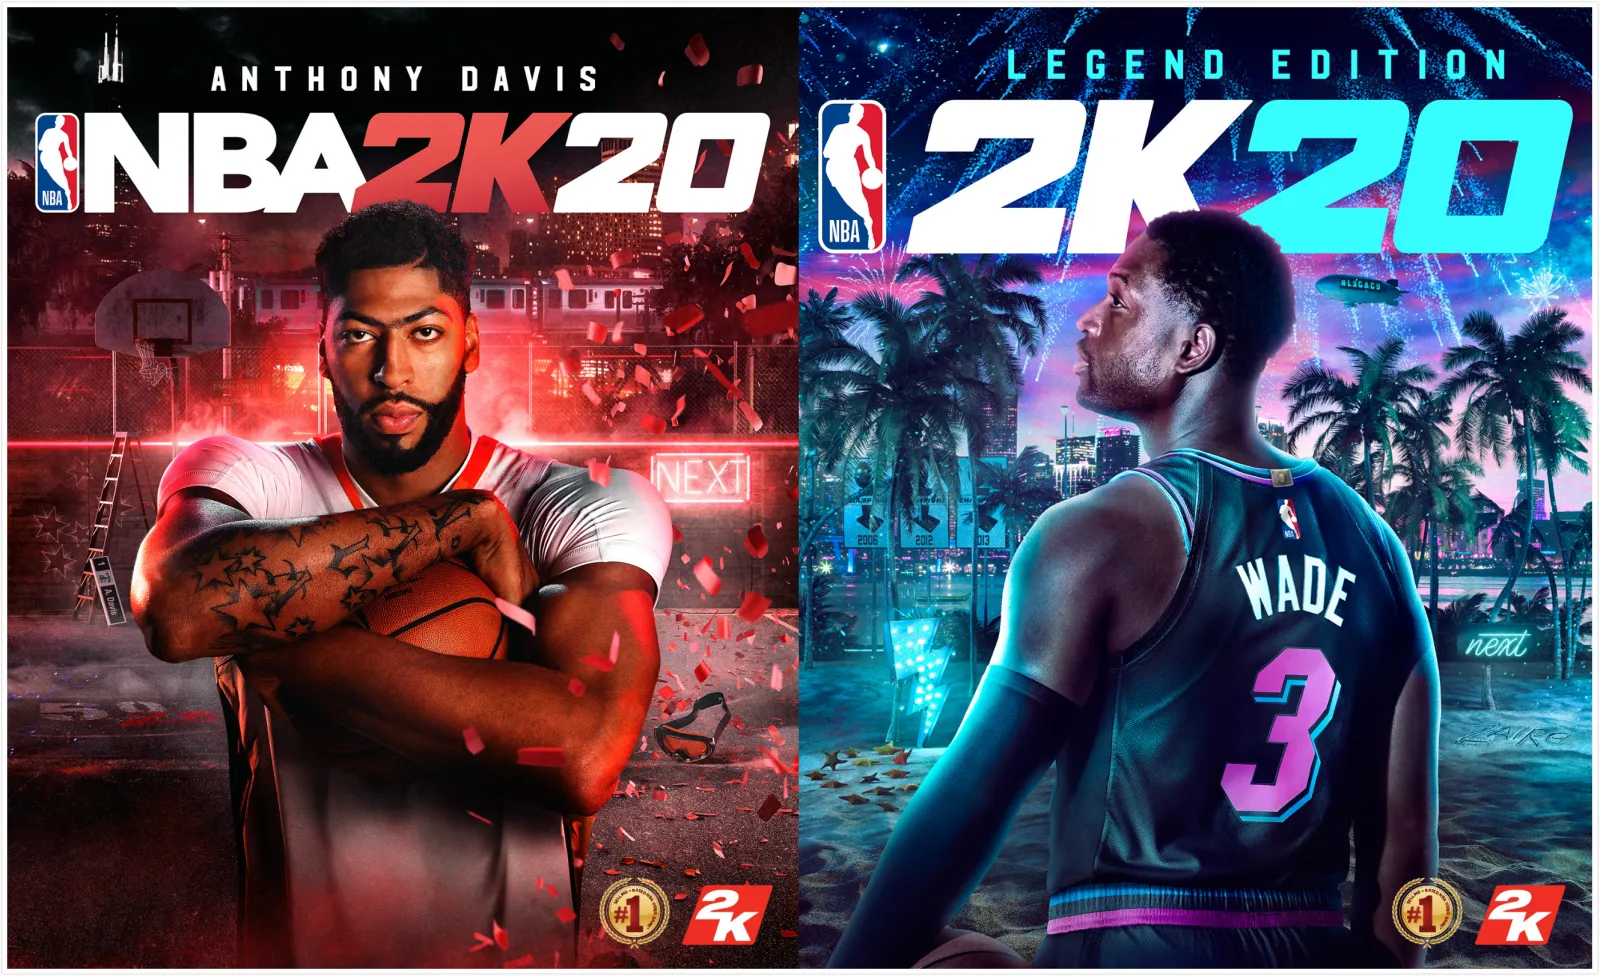 《NBA 2K20》封面公布，安东尼·戴维斯和德怀恩·韦德分别成为普通版和传奇版封面球星